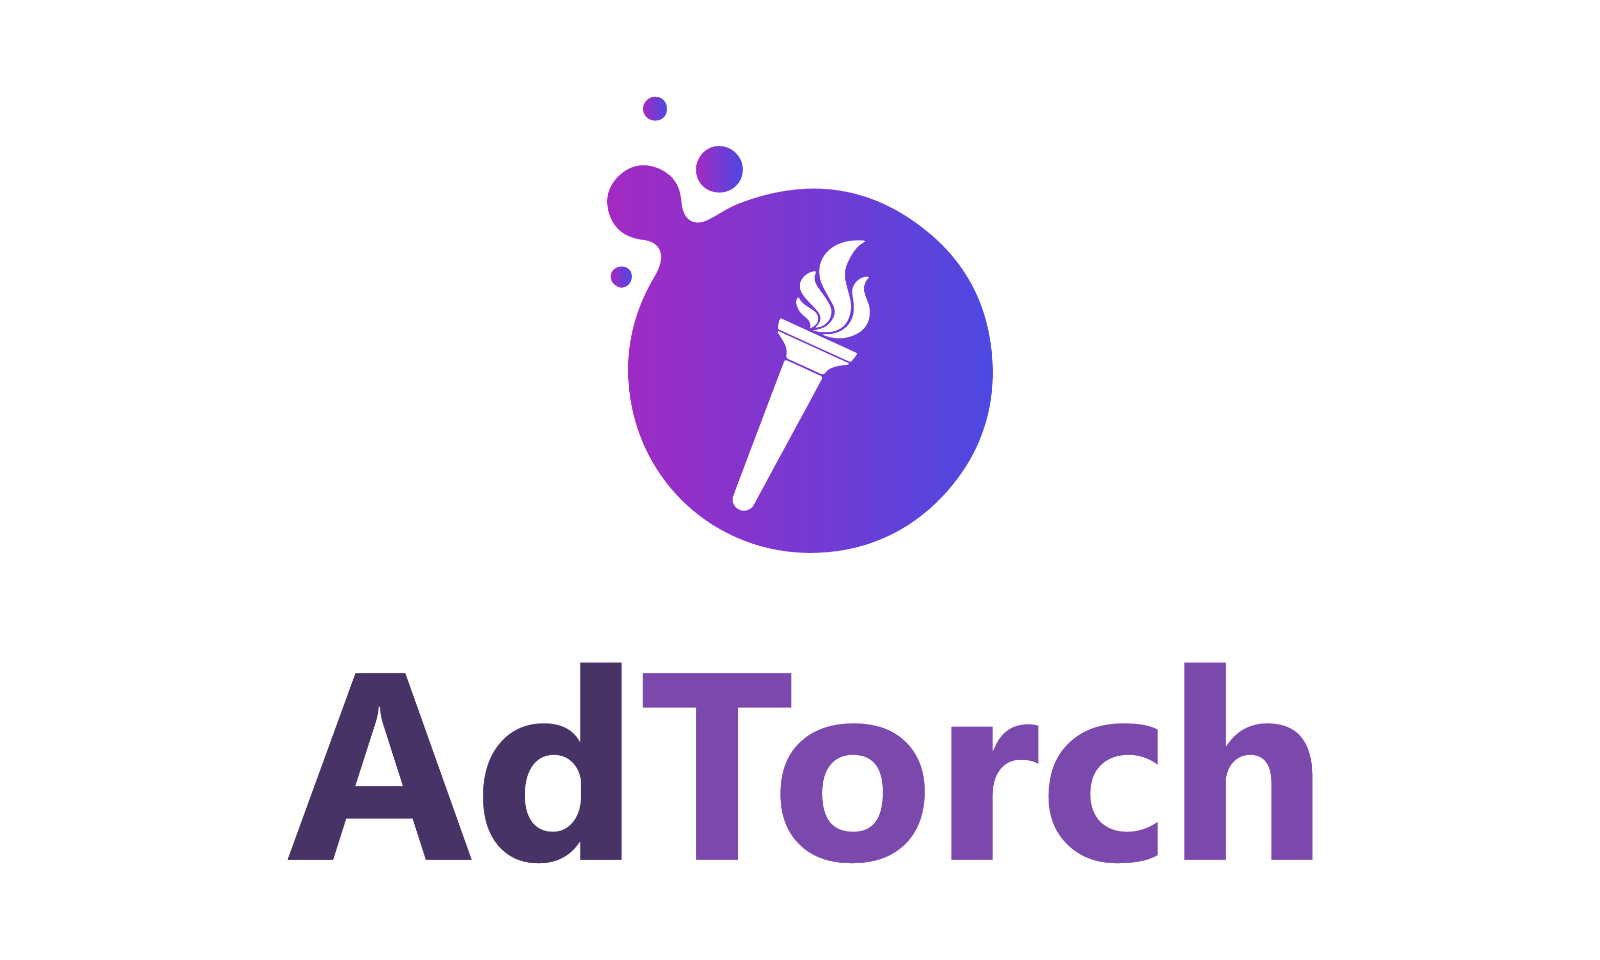 AdTorch.com - Creative brandable domain for sale